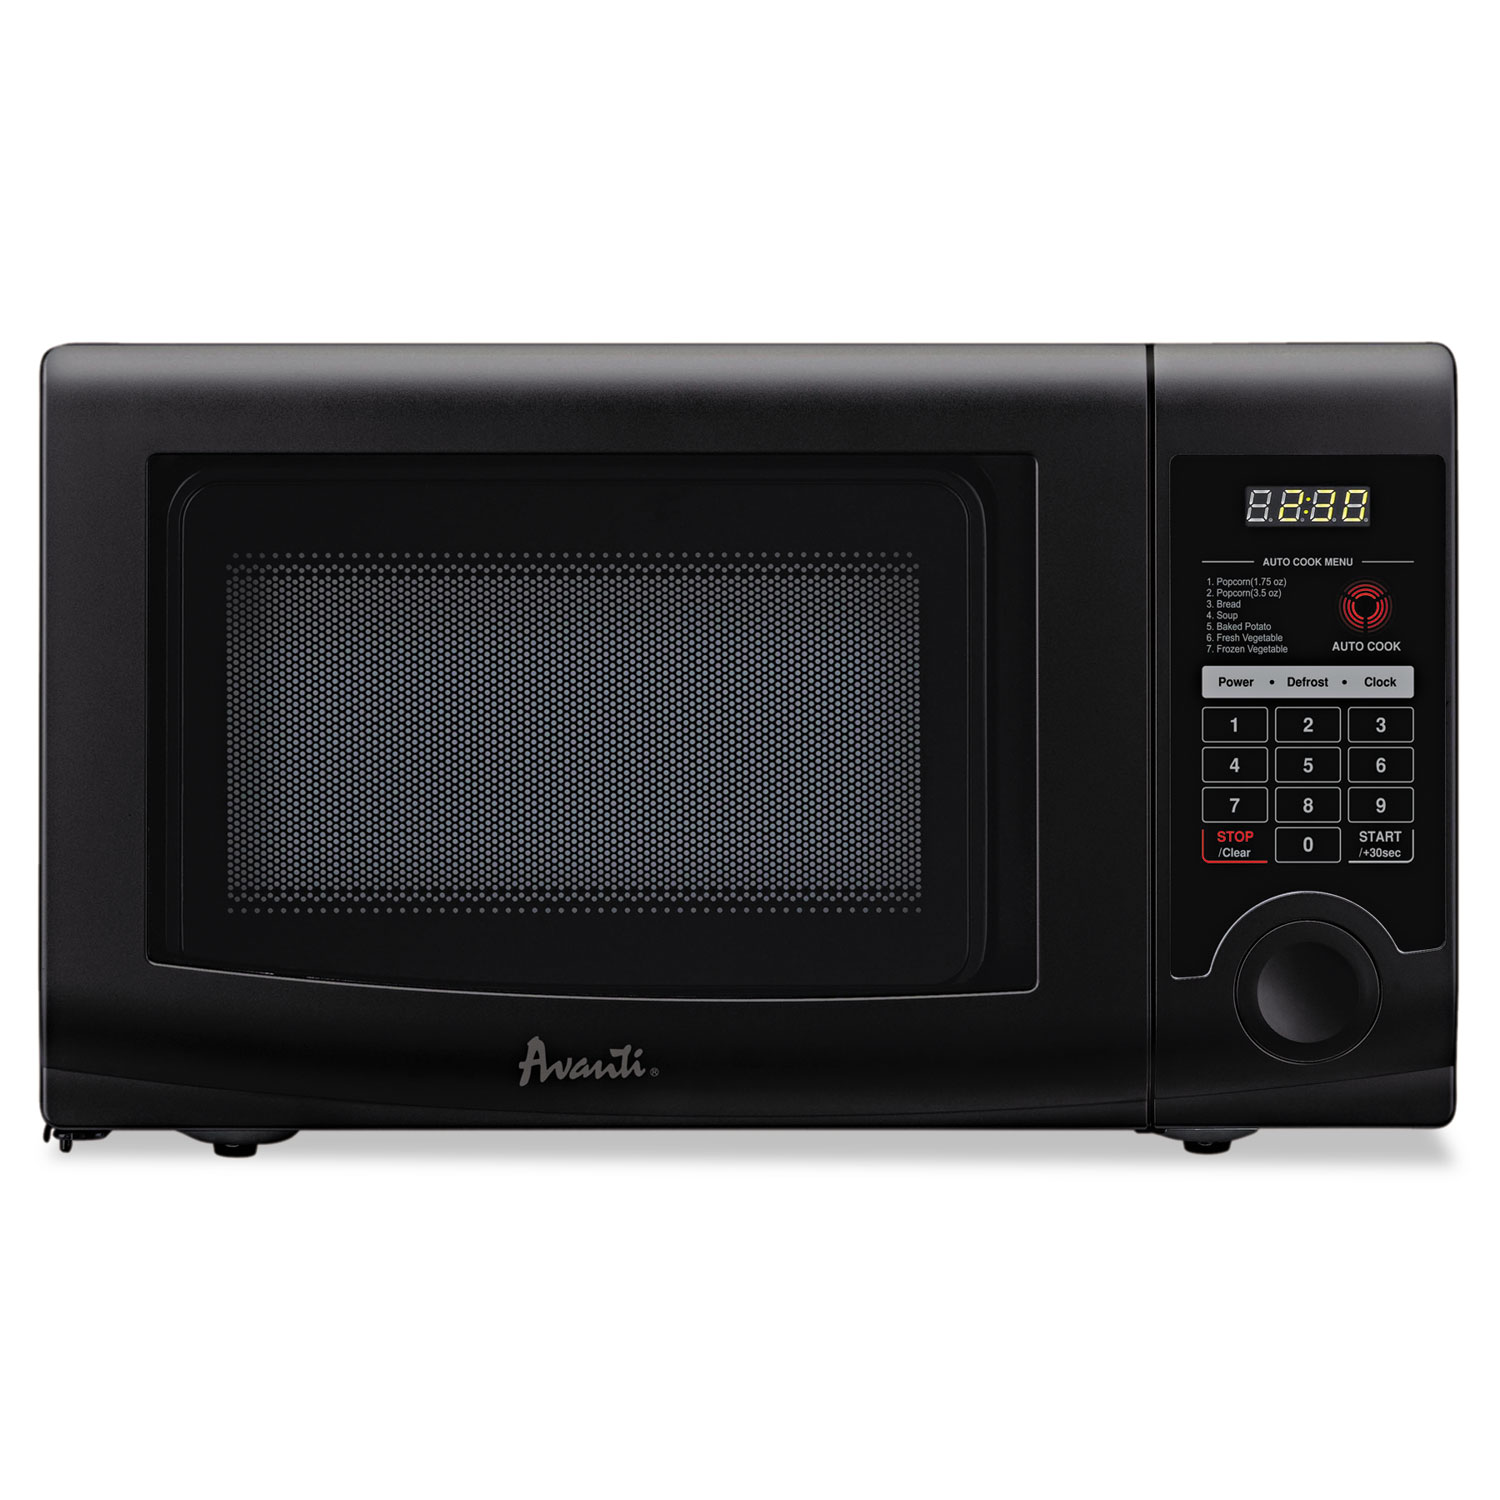  Avanti MO7192TB 0.7 Cubic Foot Capacity Microwave Oven, 700 Watts, Black (AVAMO7192TB) 